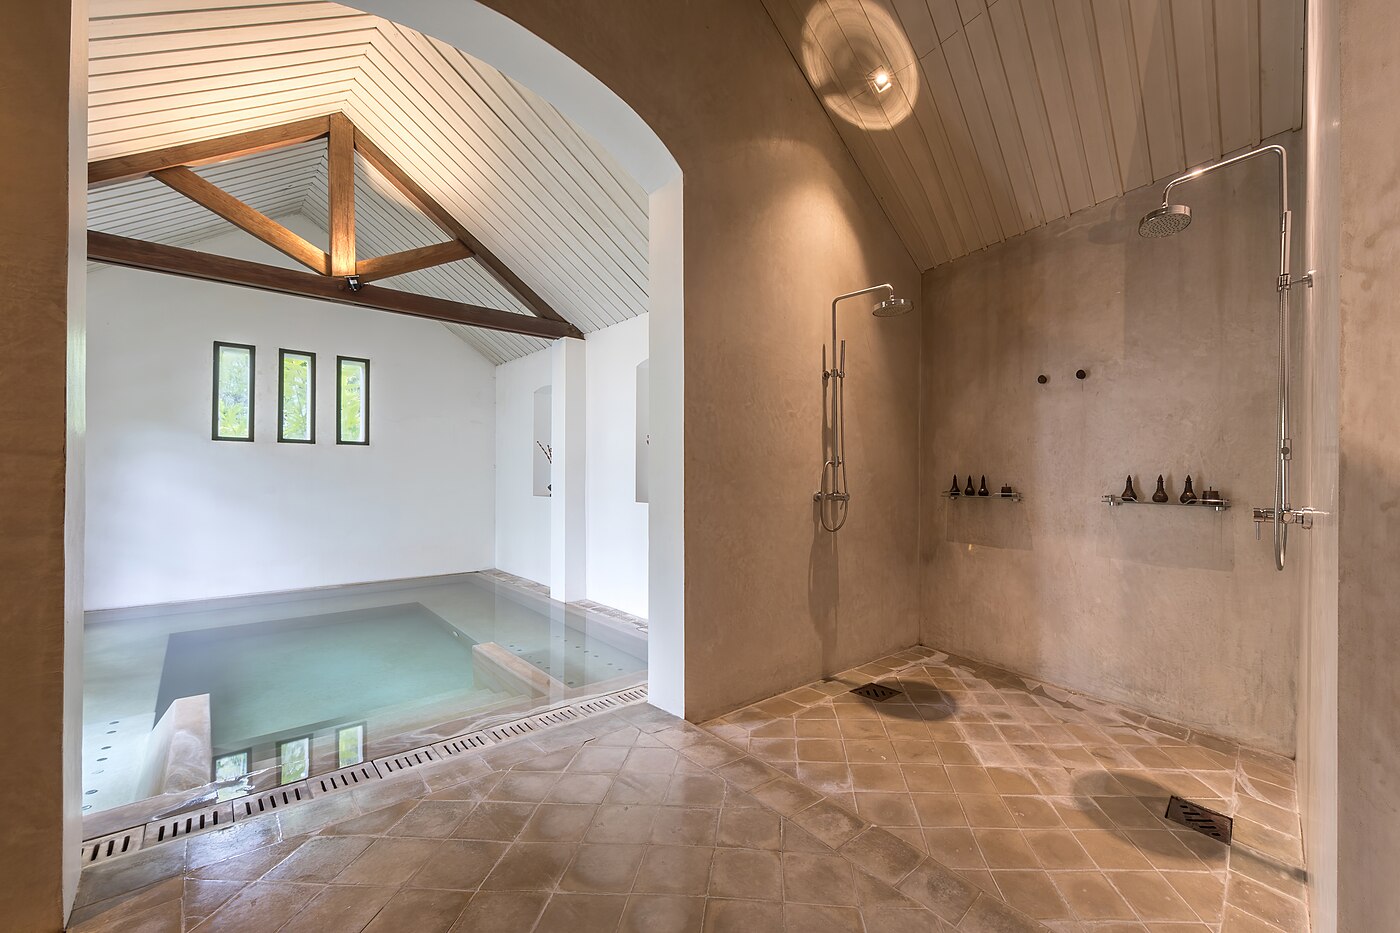 Indoor pool and showers of the spa at Amantaka luxury Resort & Hotel in Luang Prabang Laos